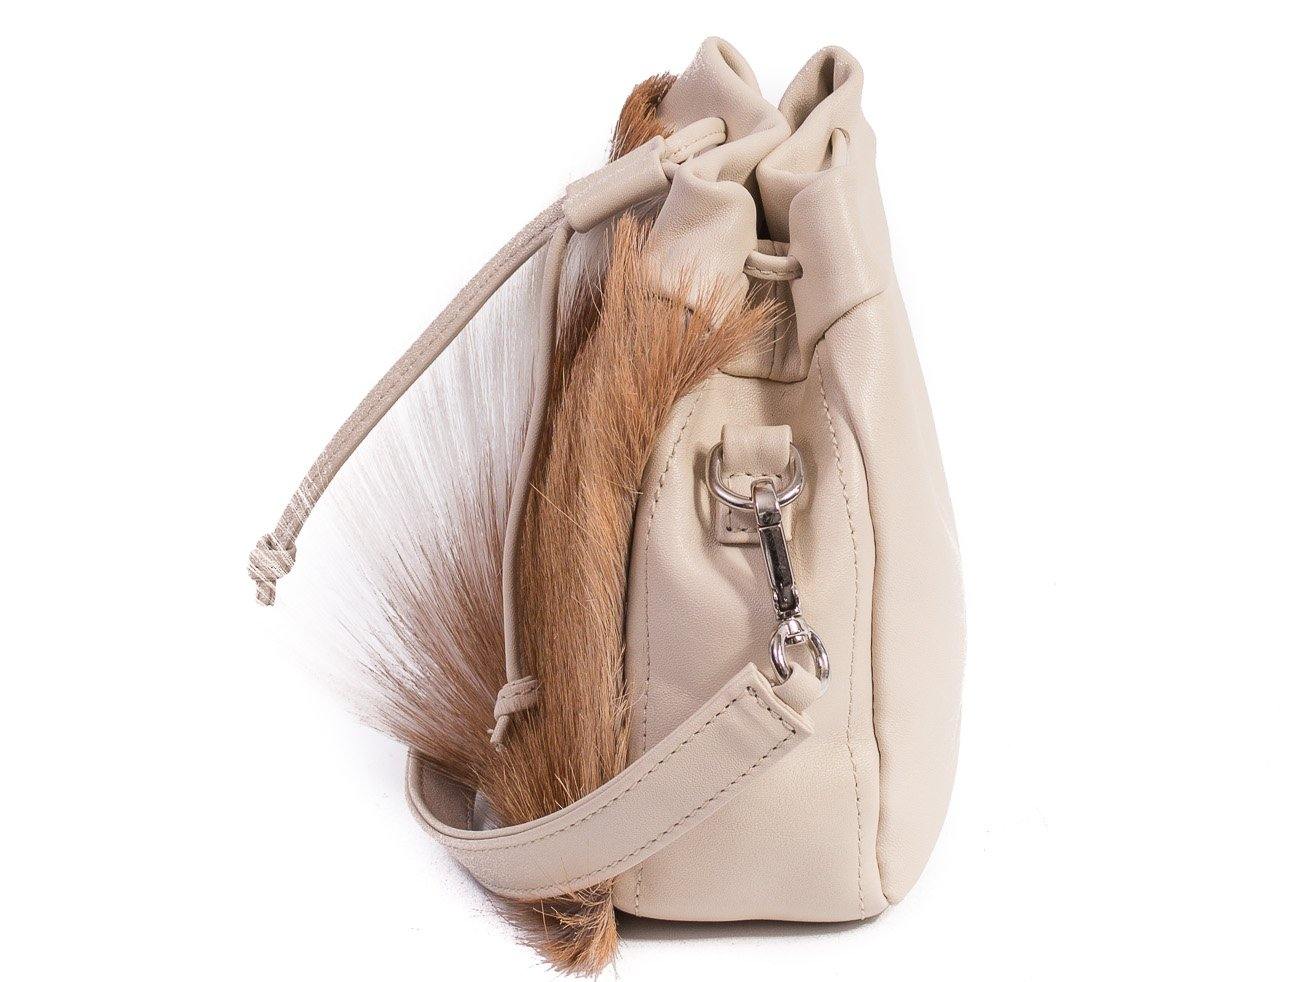 sherene melinda springbok hair-on-hide natural leather pouch bag Fan side